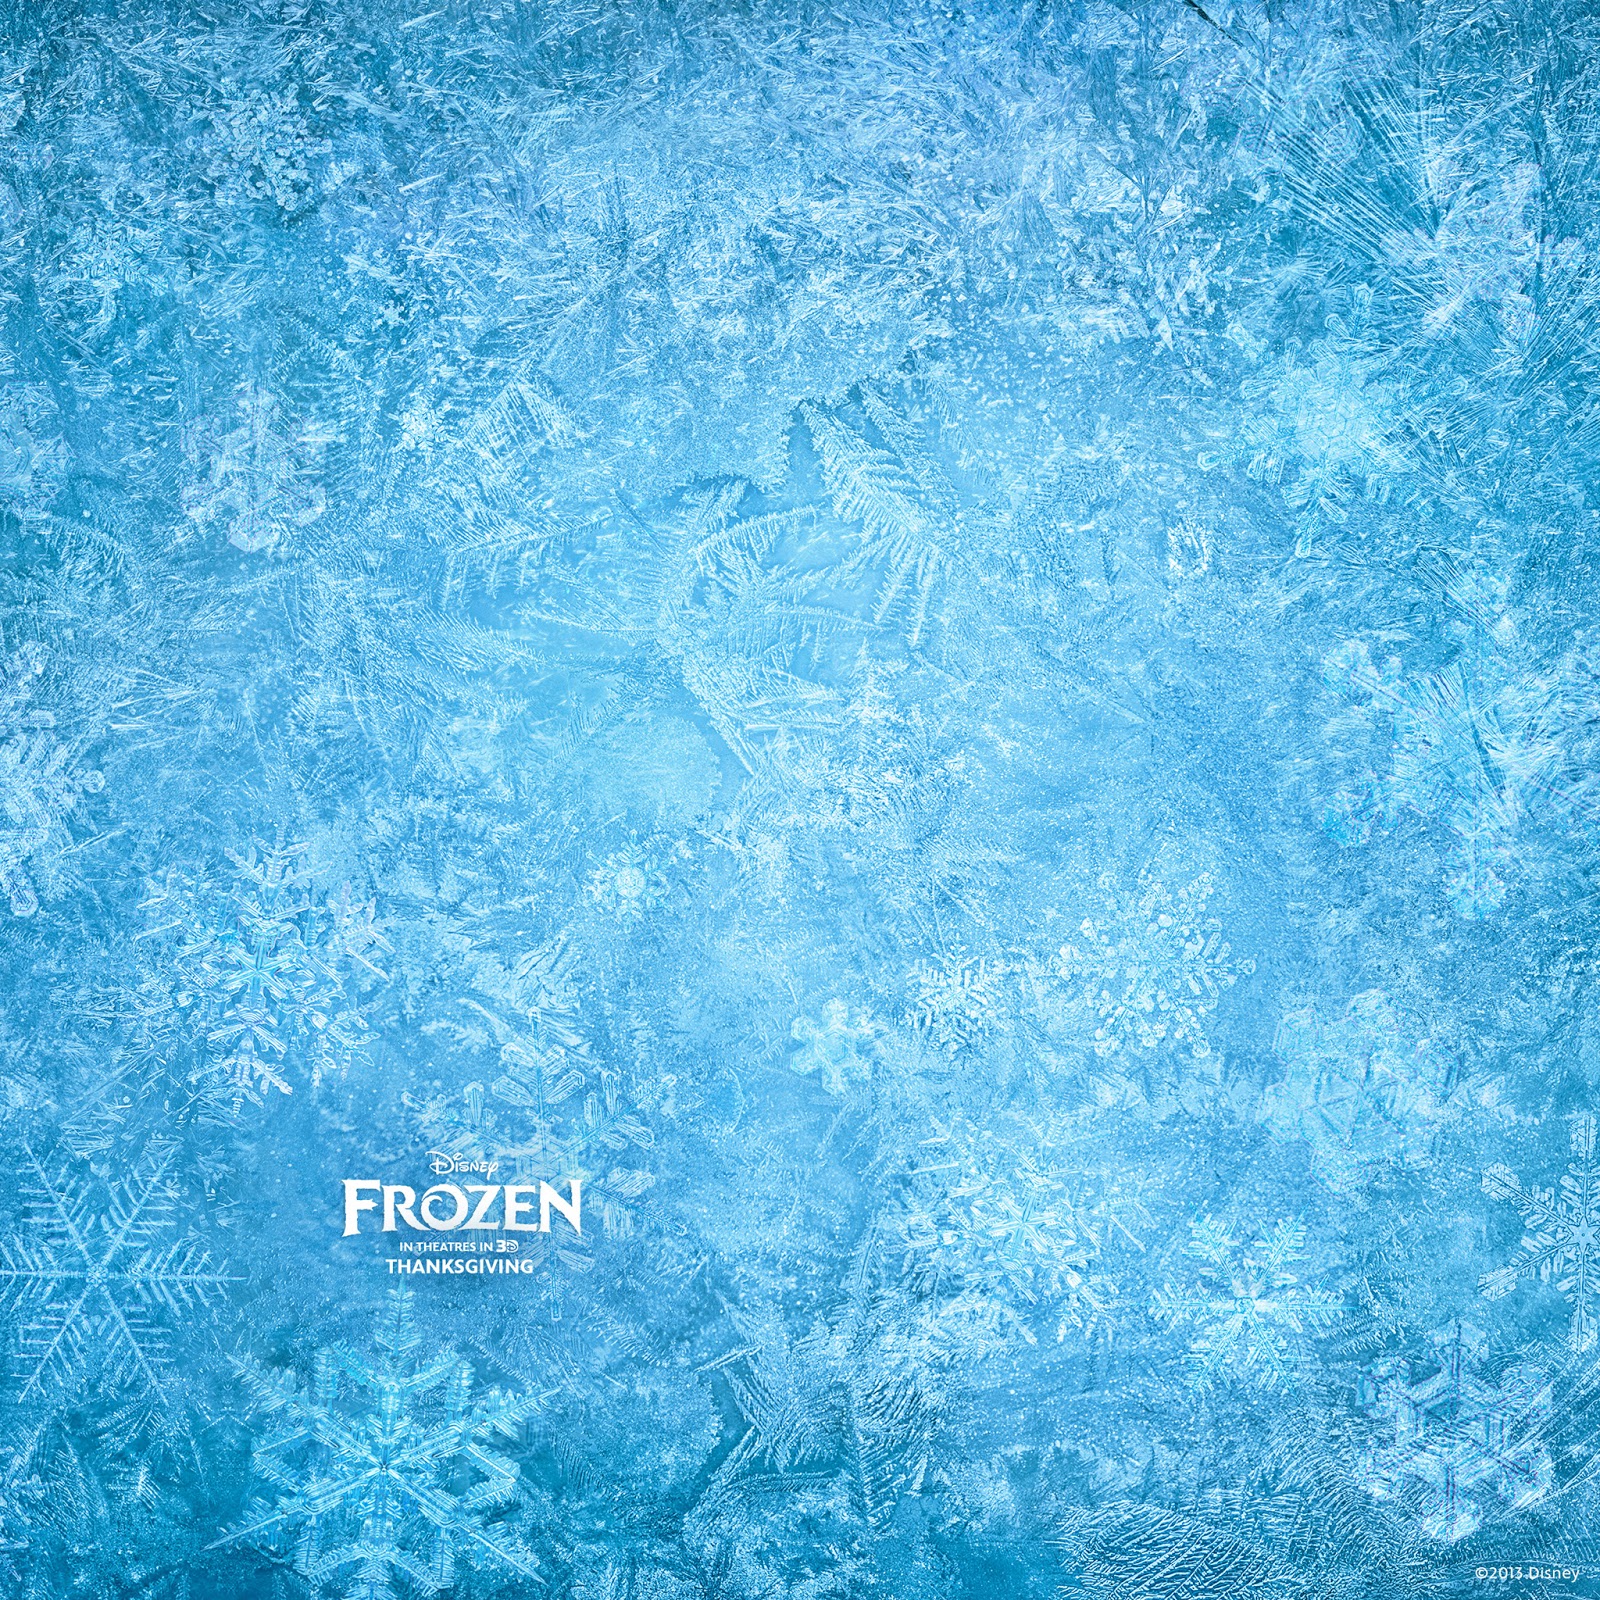 Frozen image